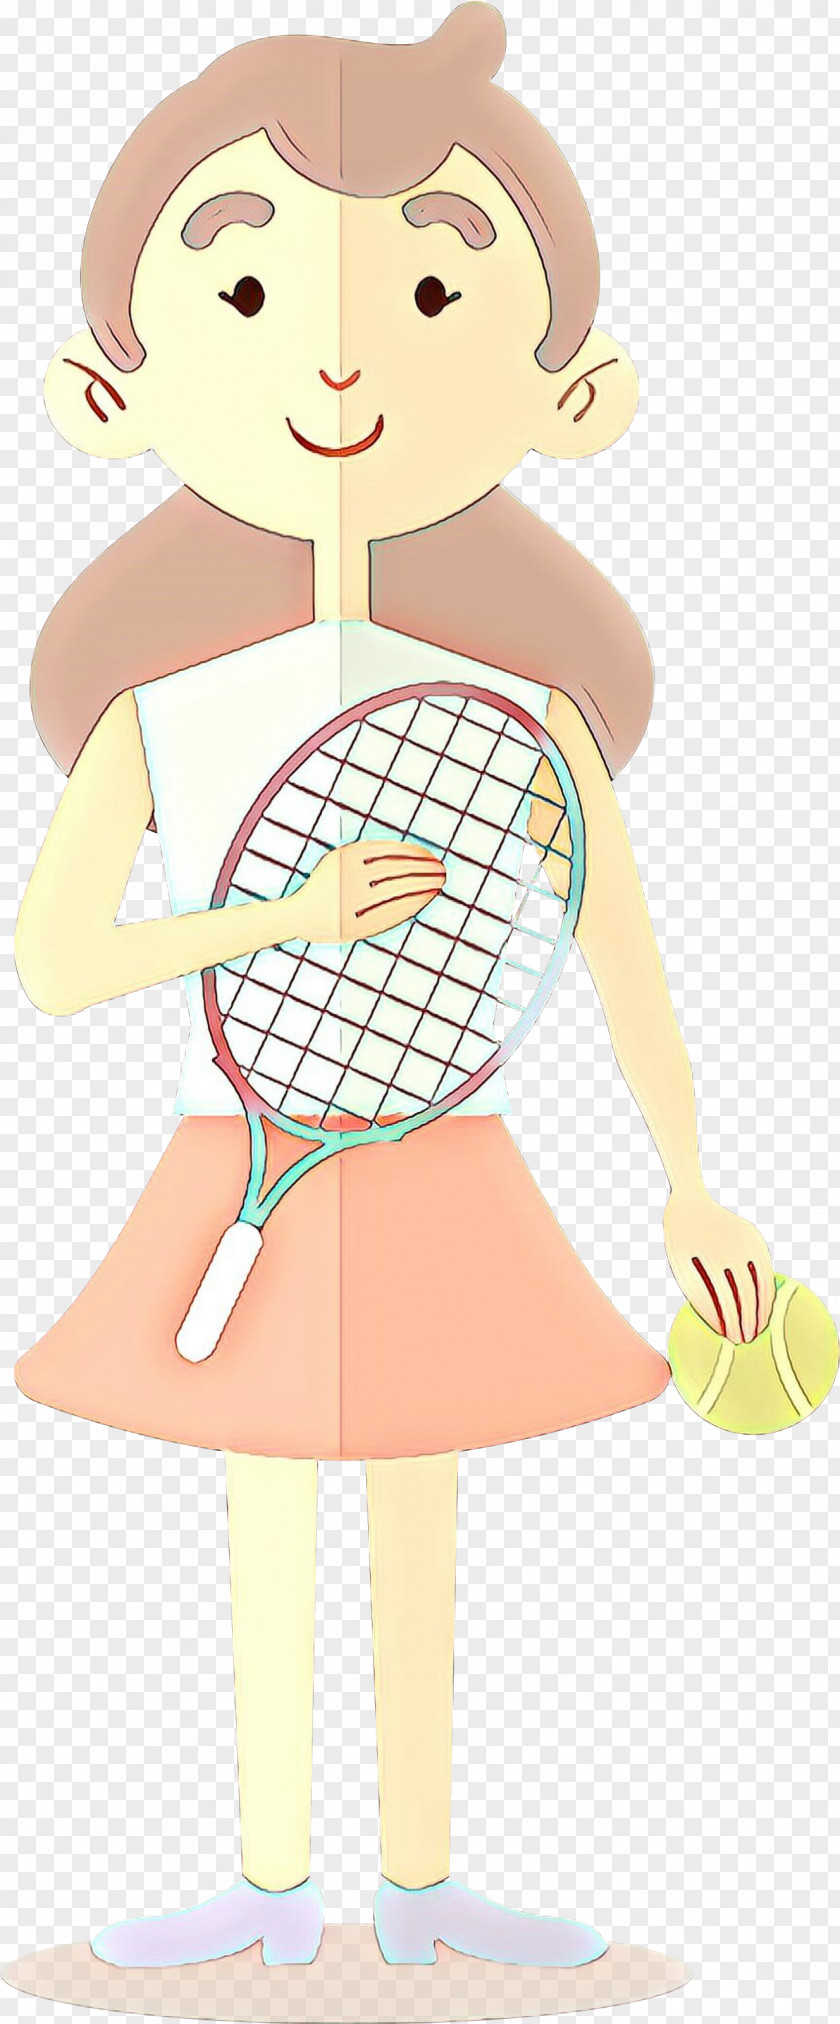 Tennis Racket Cartoon Player PNG